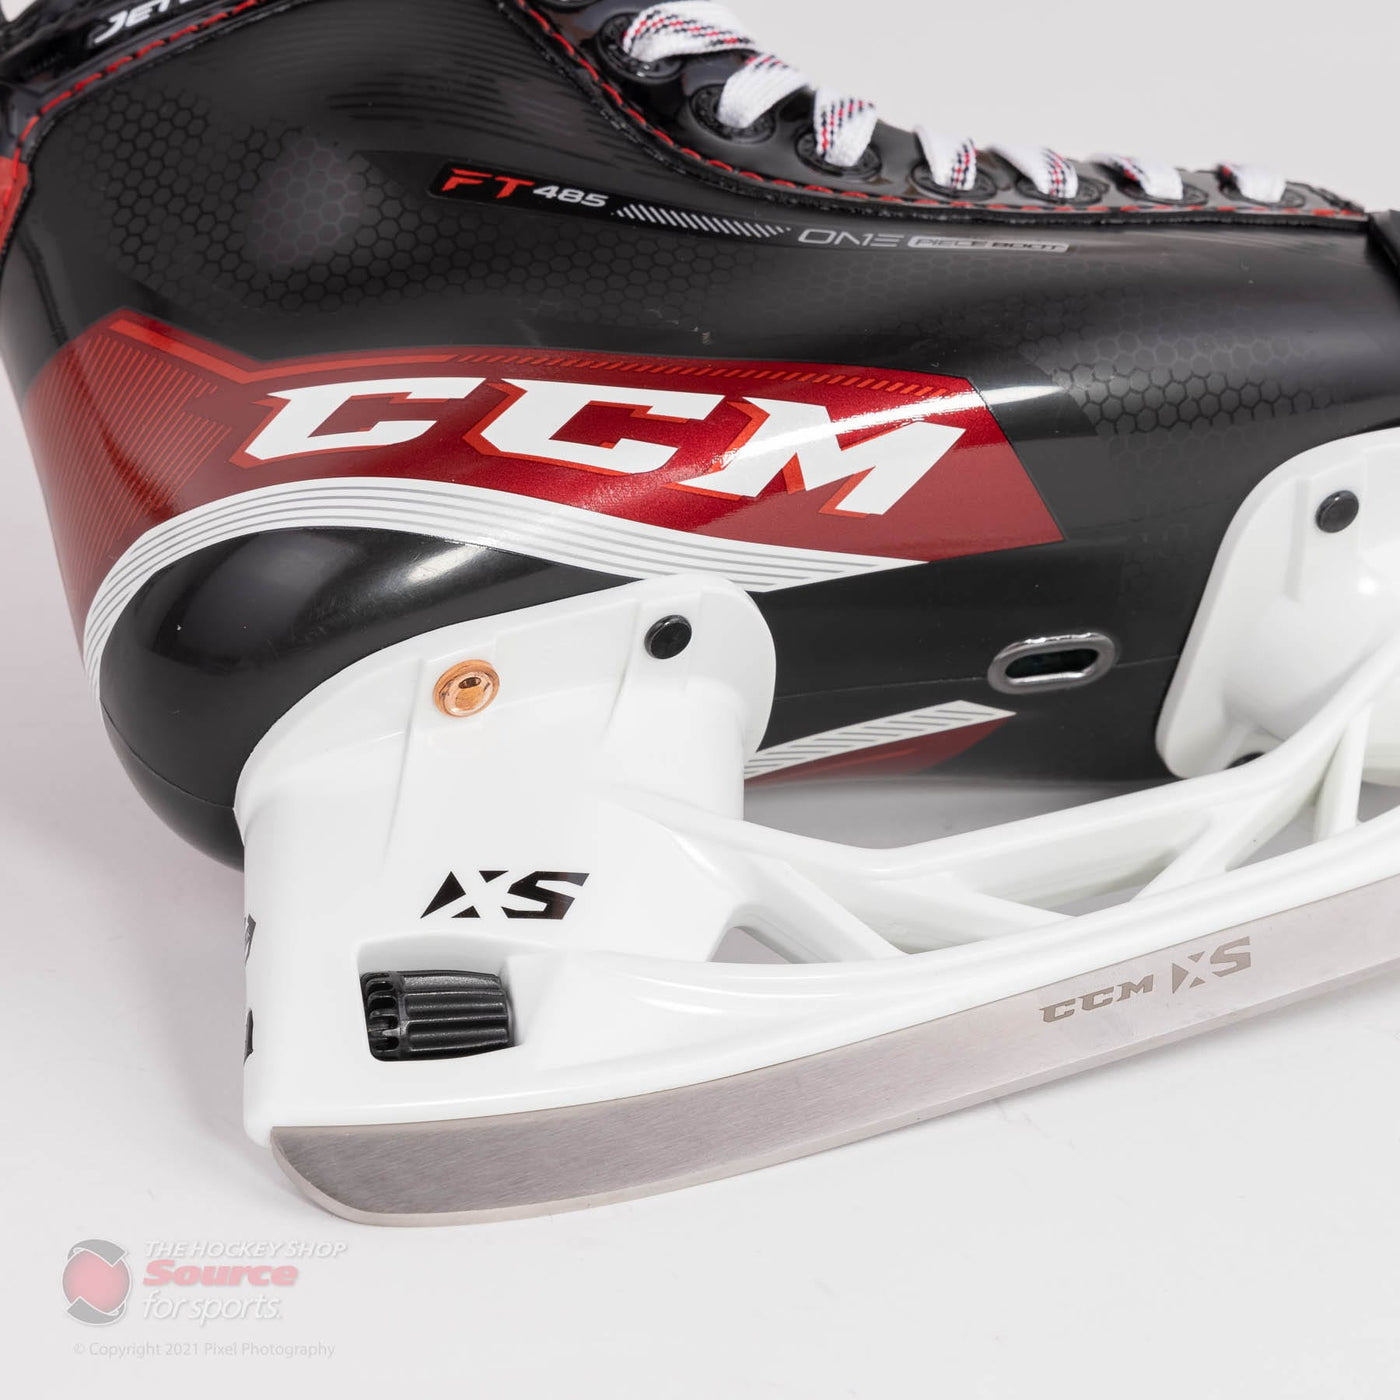 CCM Jetspeed FT485 Junior Hockey Skates